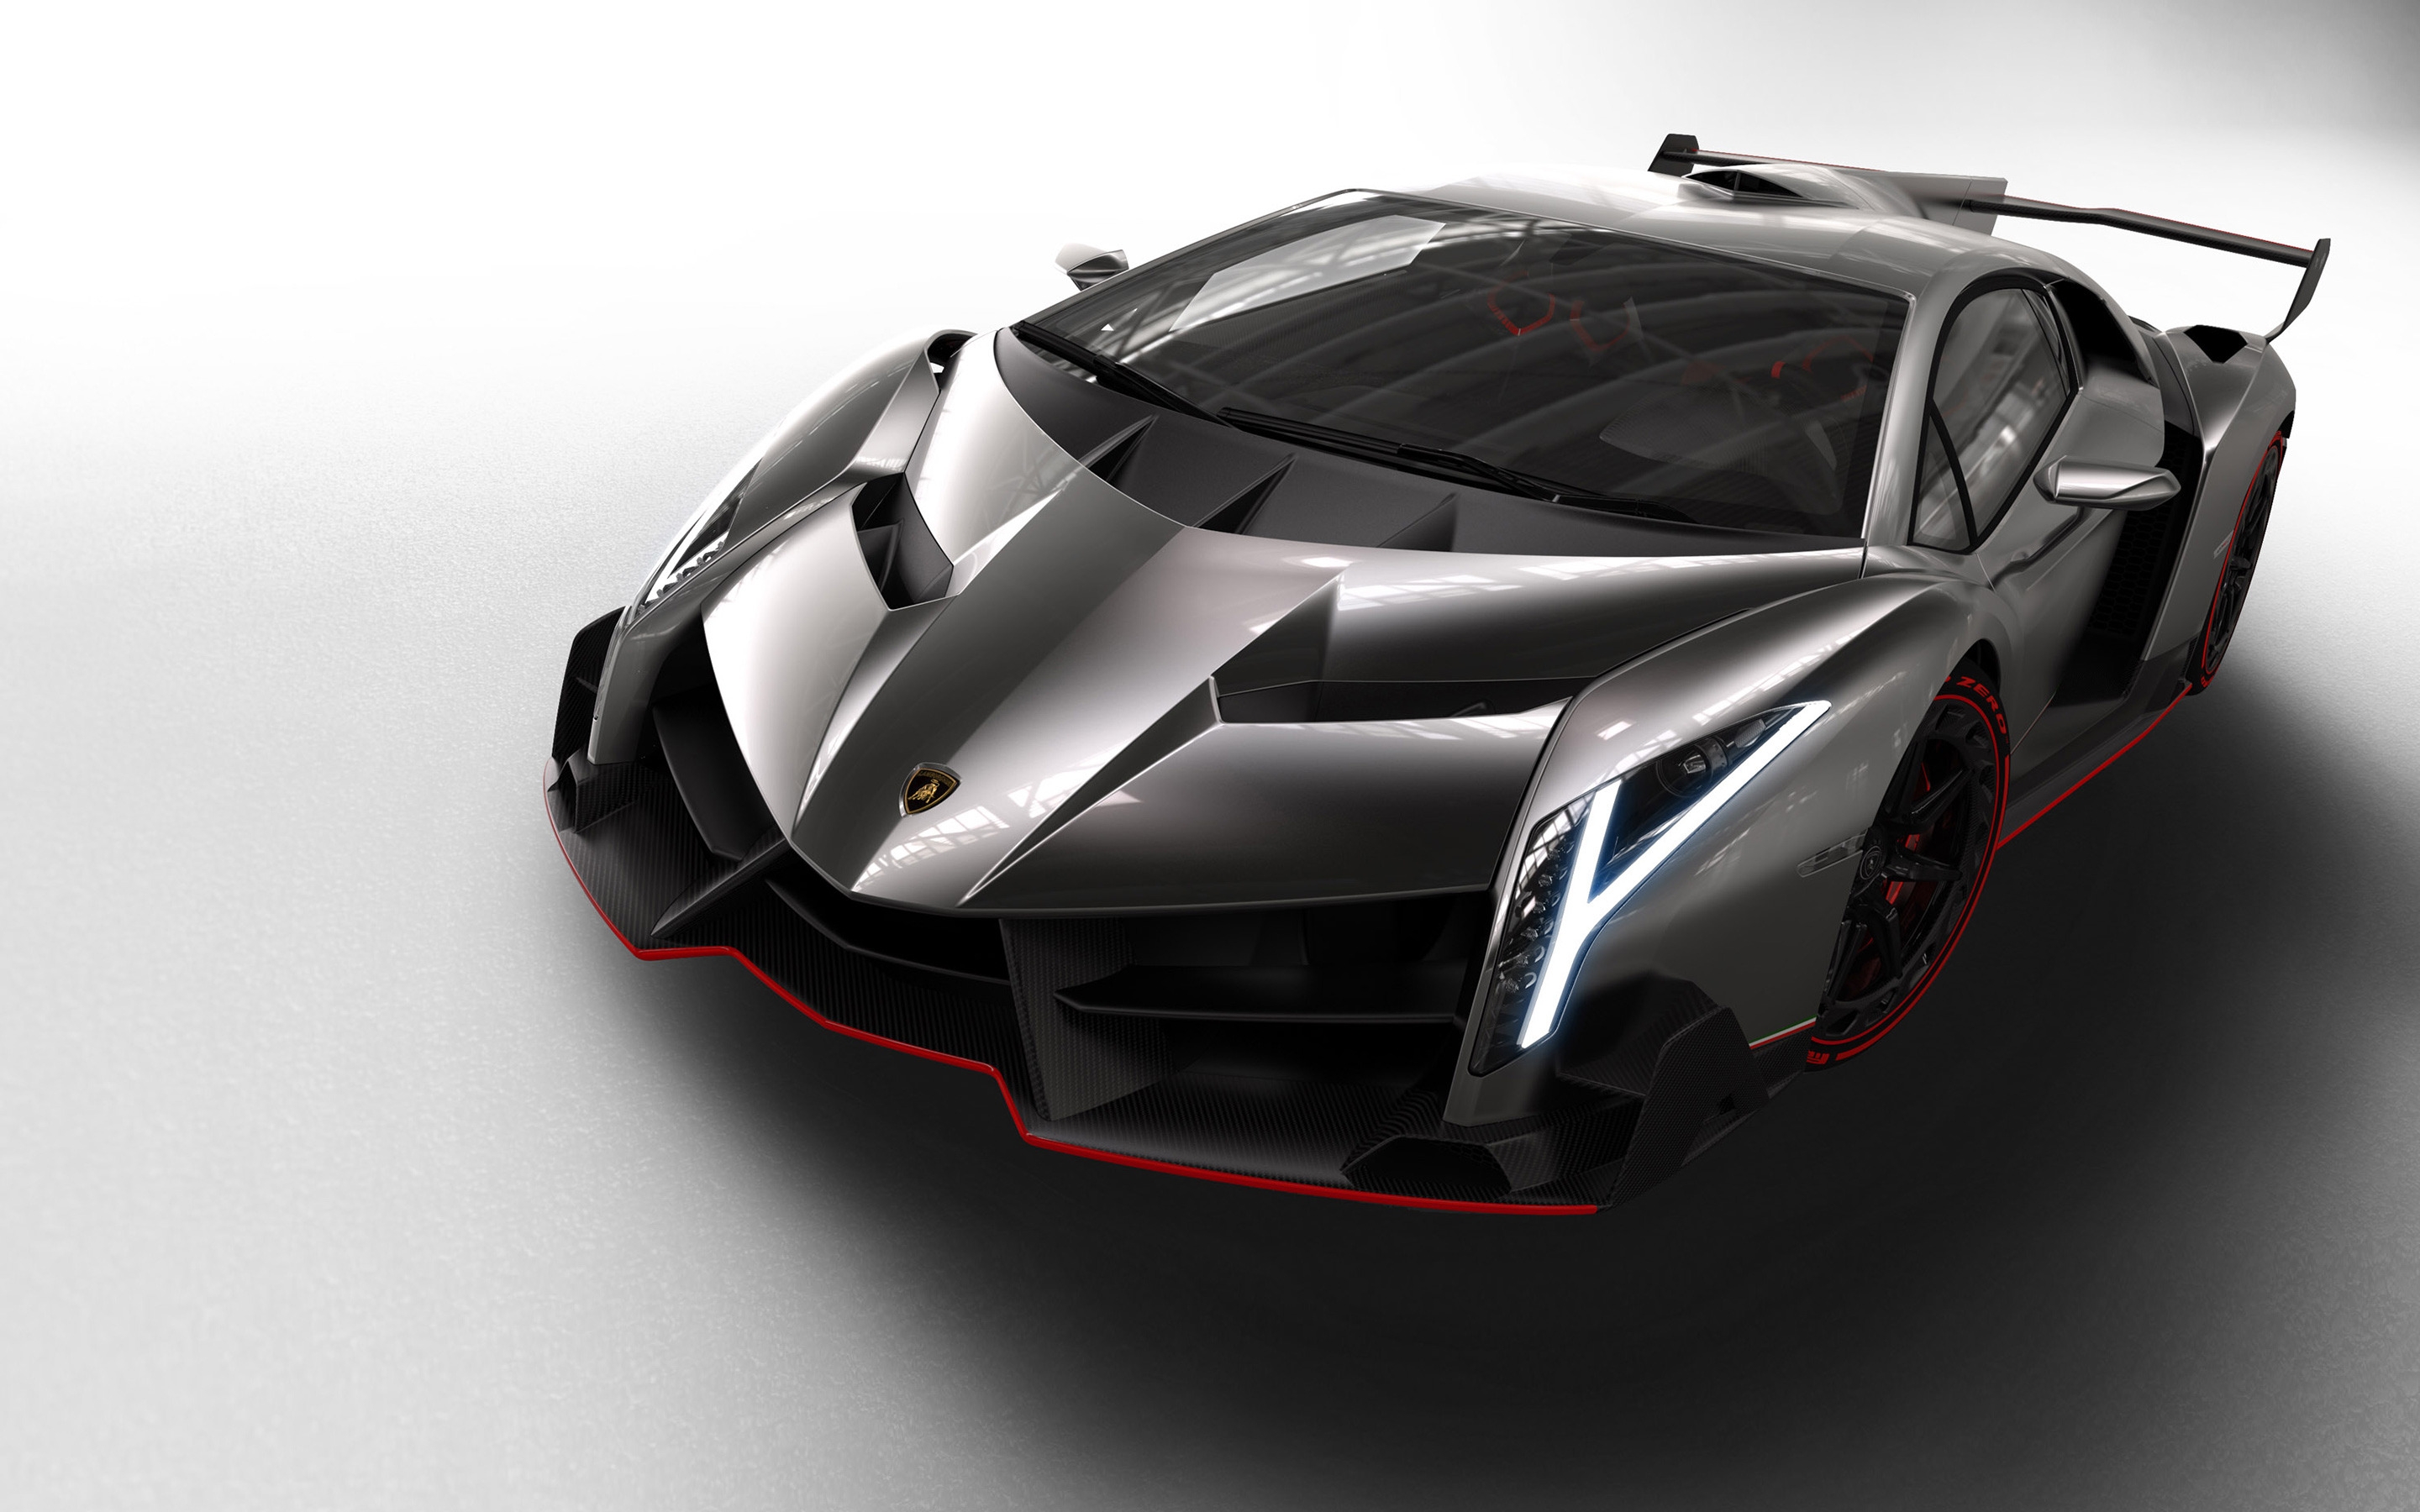 Lamborghini Veneno Studio for 2880 x 1800 Retina Display resolution